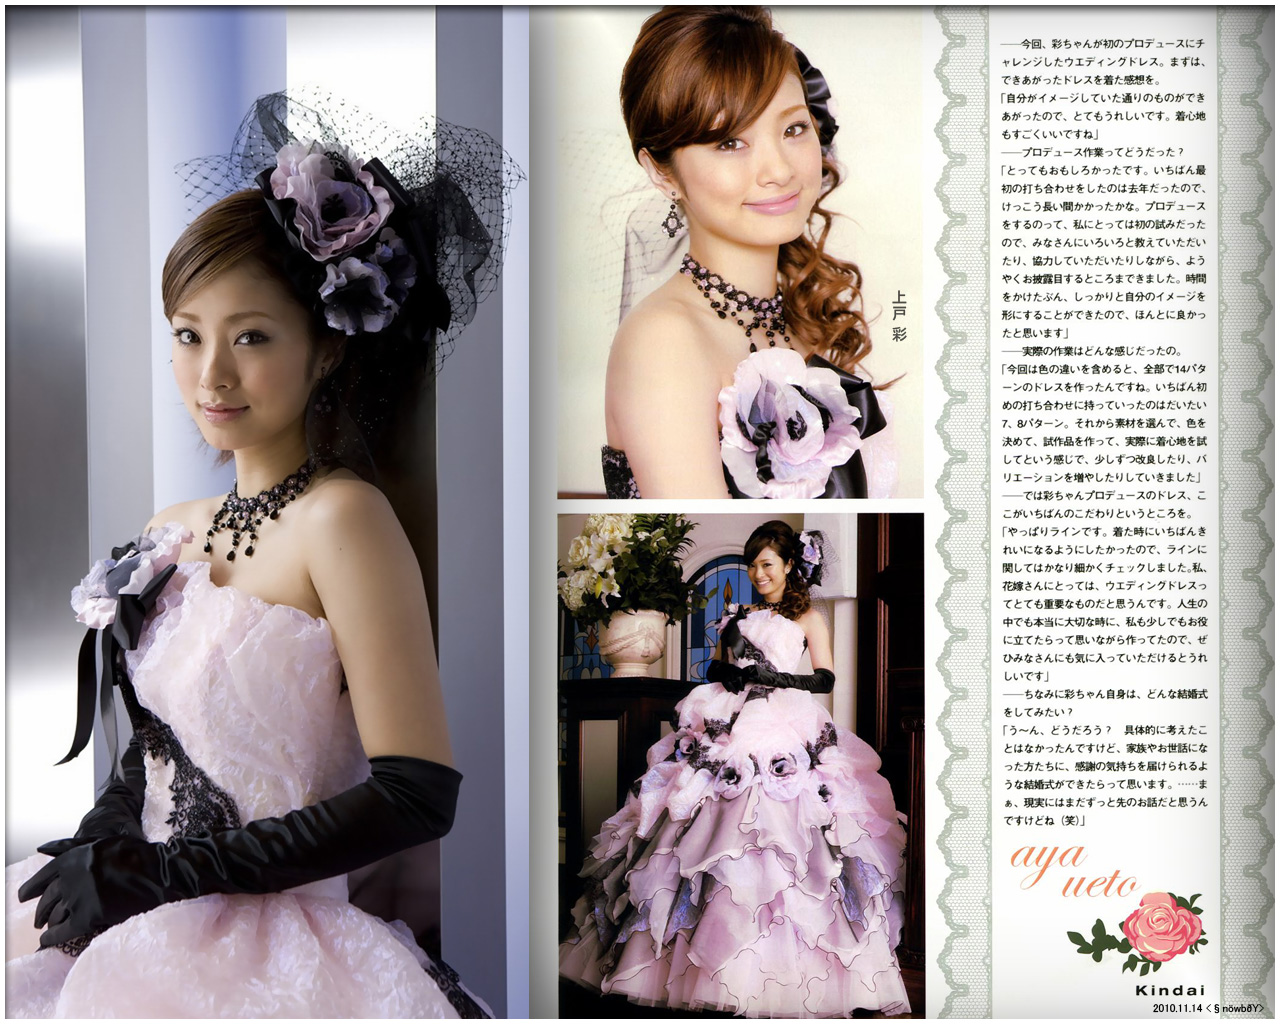 Download HQ Aya Ueto wallpaper / Celebrities Female / 1280x1024